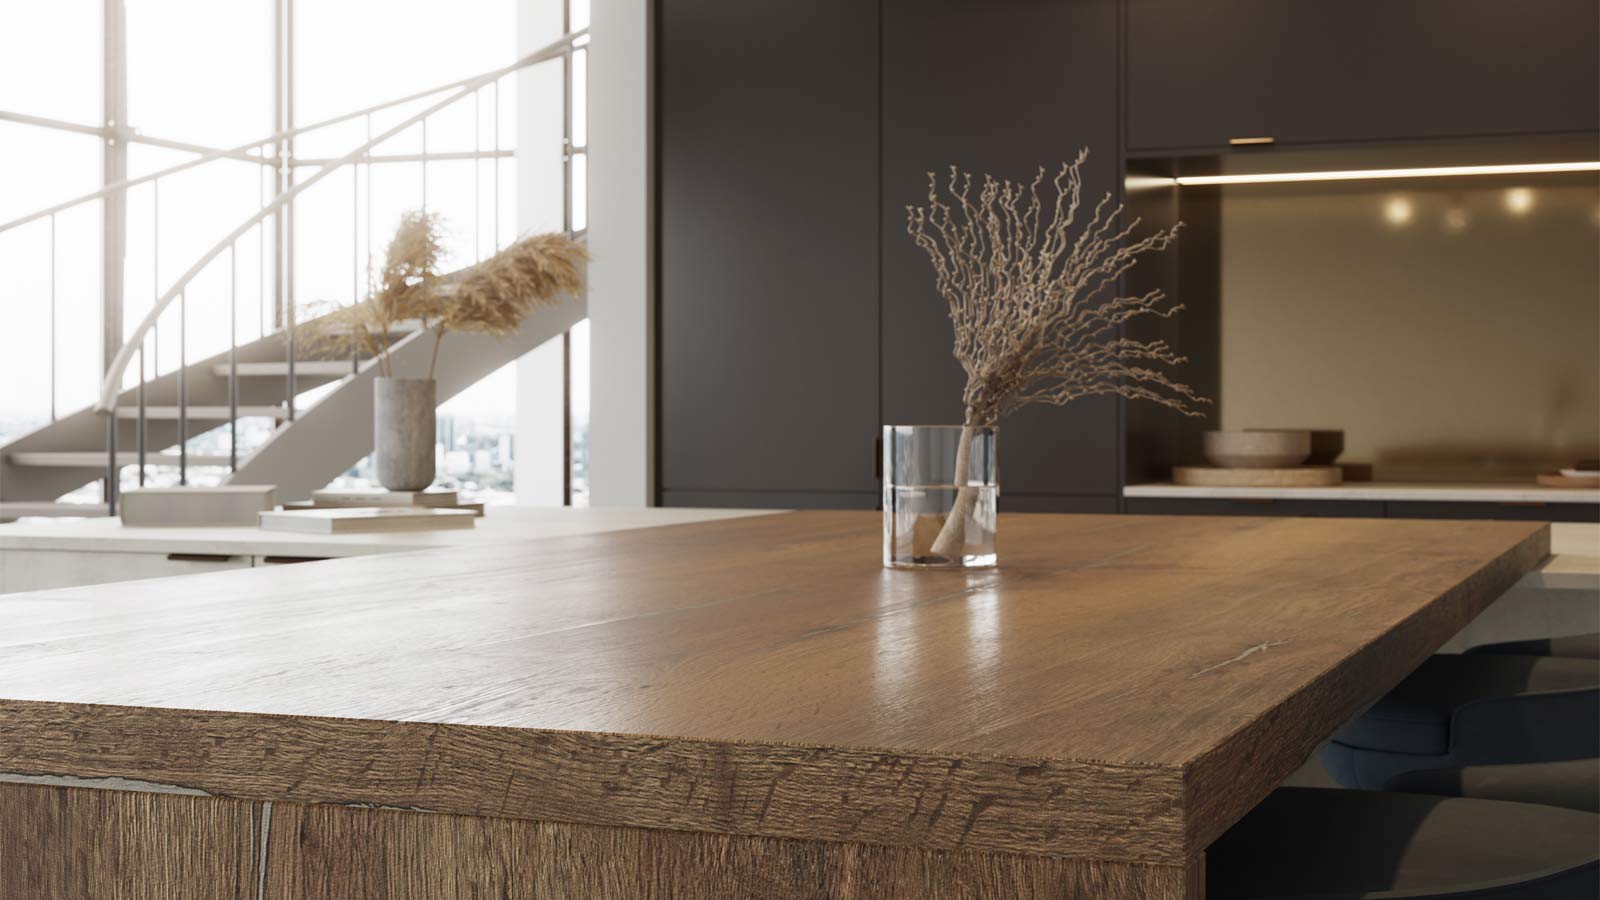 Handleless kitchen range with dark wood countertops and minimalist decor